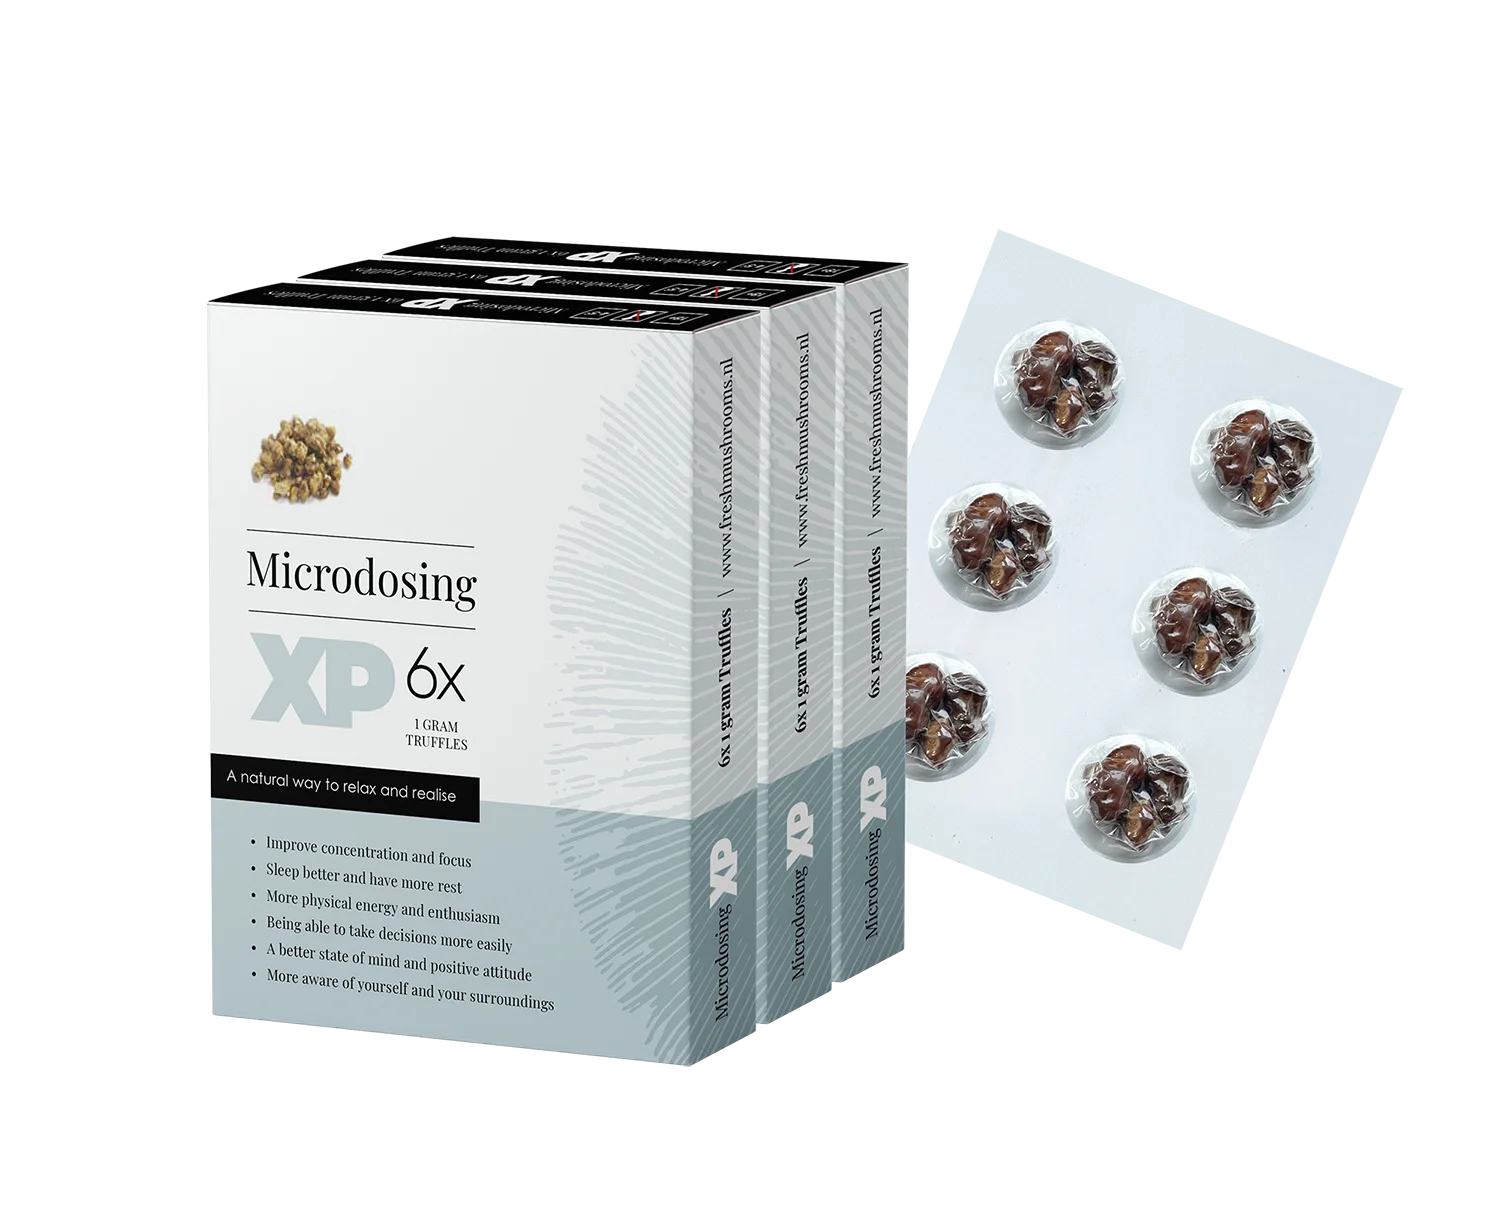 Microdose - 3x Microdosering XP truffels pack (18x1g)